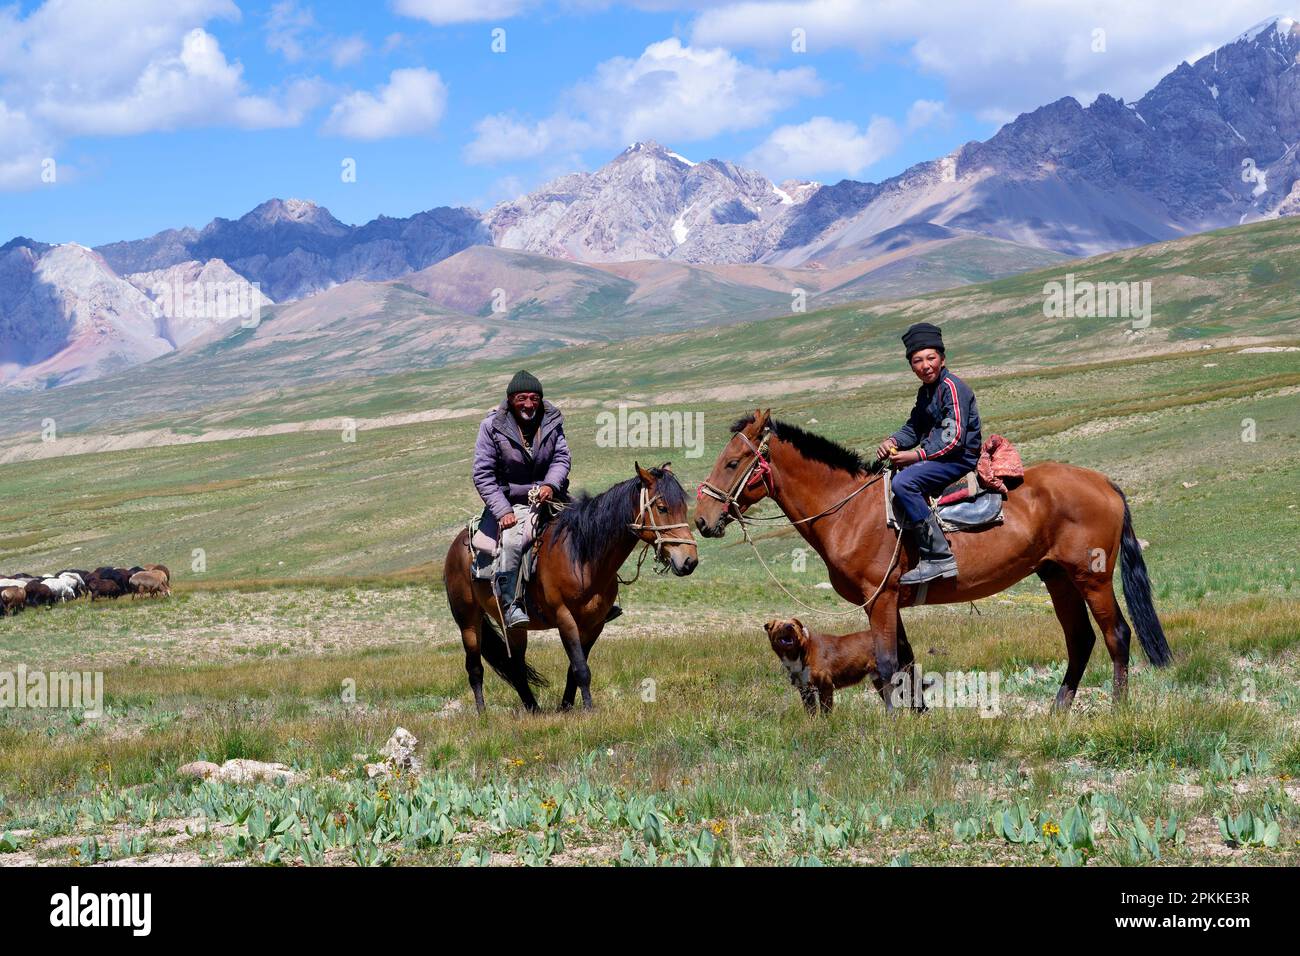 Kirgisische Nomaden und Schafherde, Tian-Shan-Gebirge nahe der chinesischen Grenze, Naryn-Region, Kirgisistan, Zentralasien, Asien Stockfoto